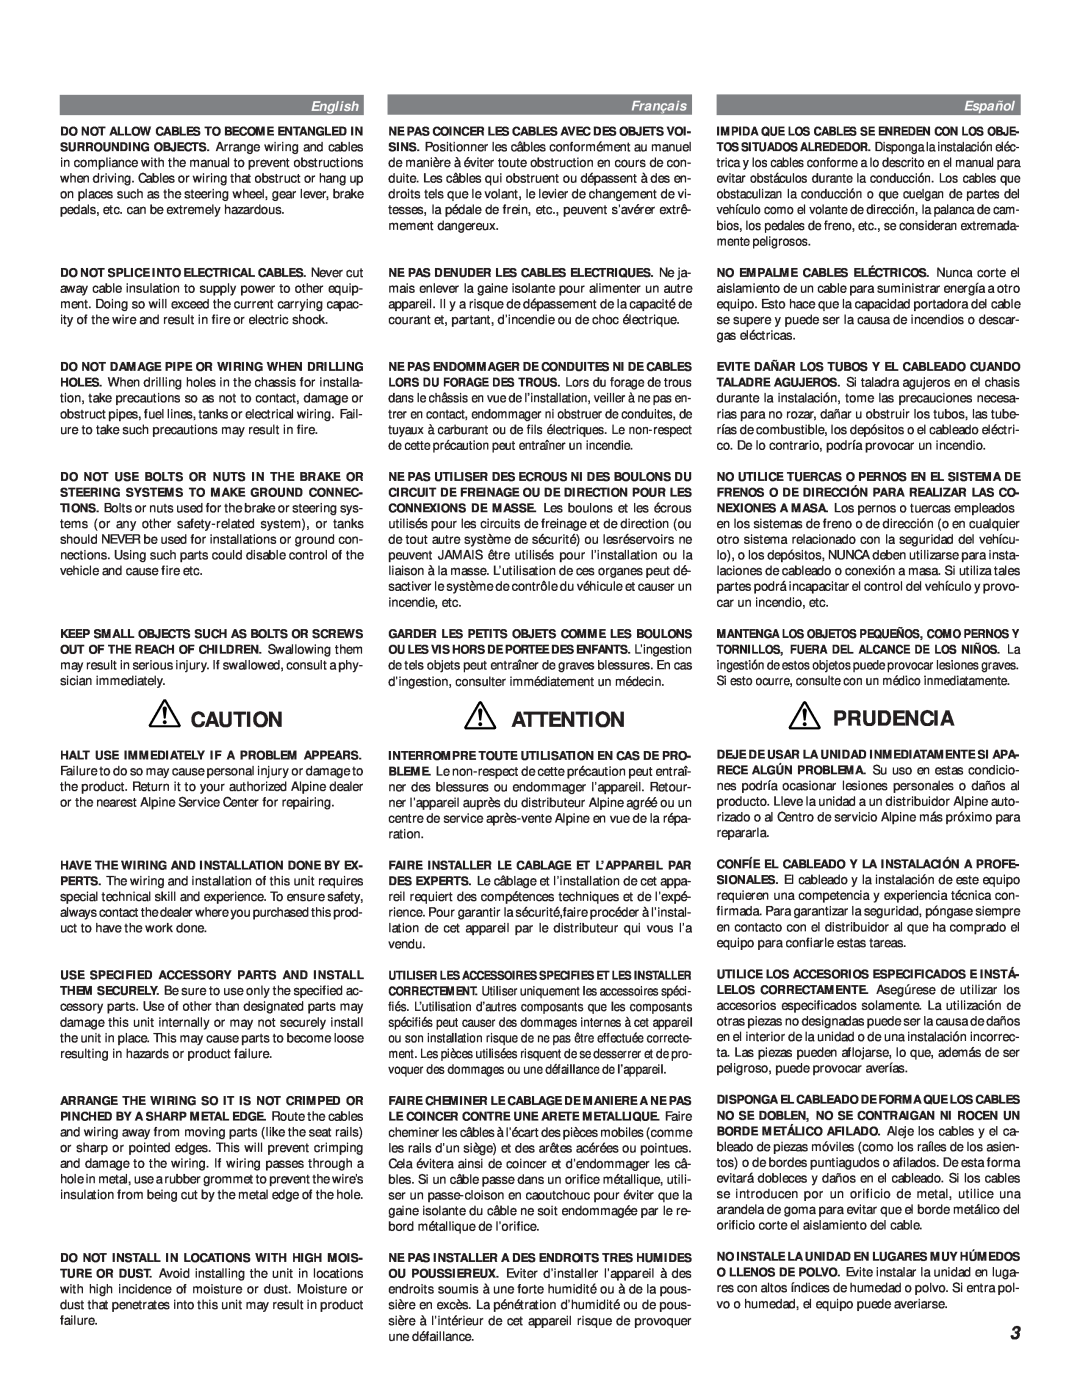 Alpine MRP-M200 owner manual Attention Prudencia, English, Français, Español 